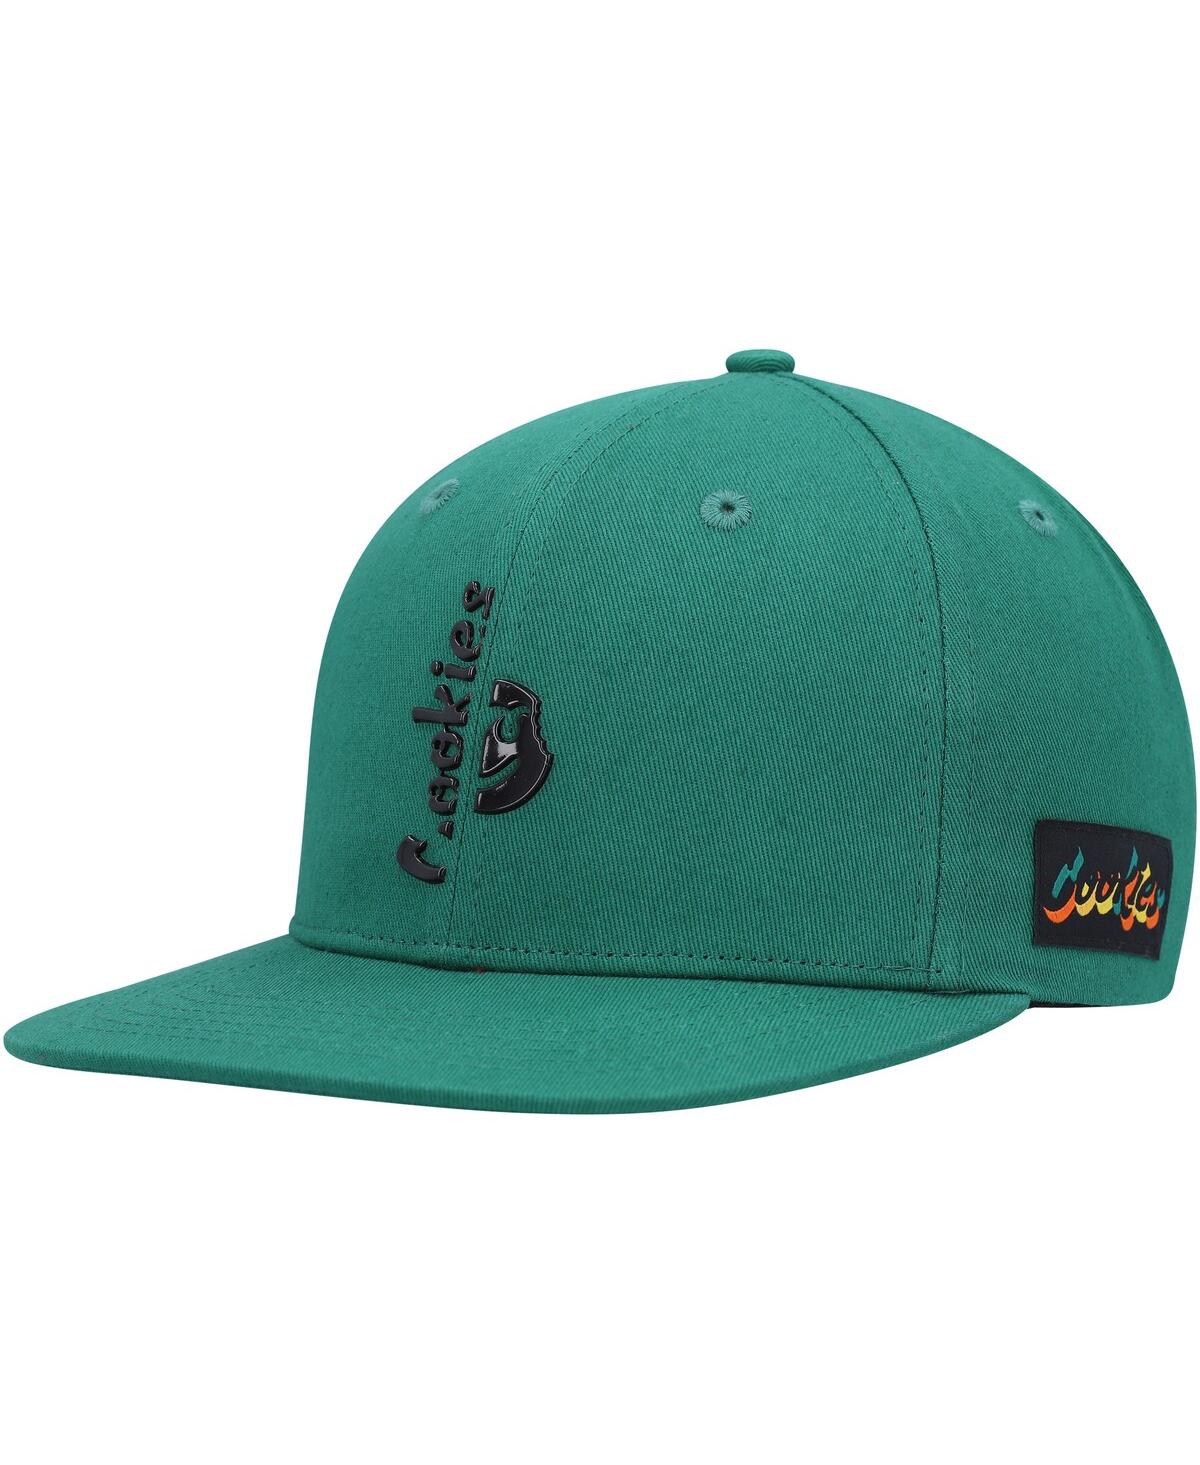 Cookies Men's  Green Searchlight Snapback Hat